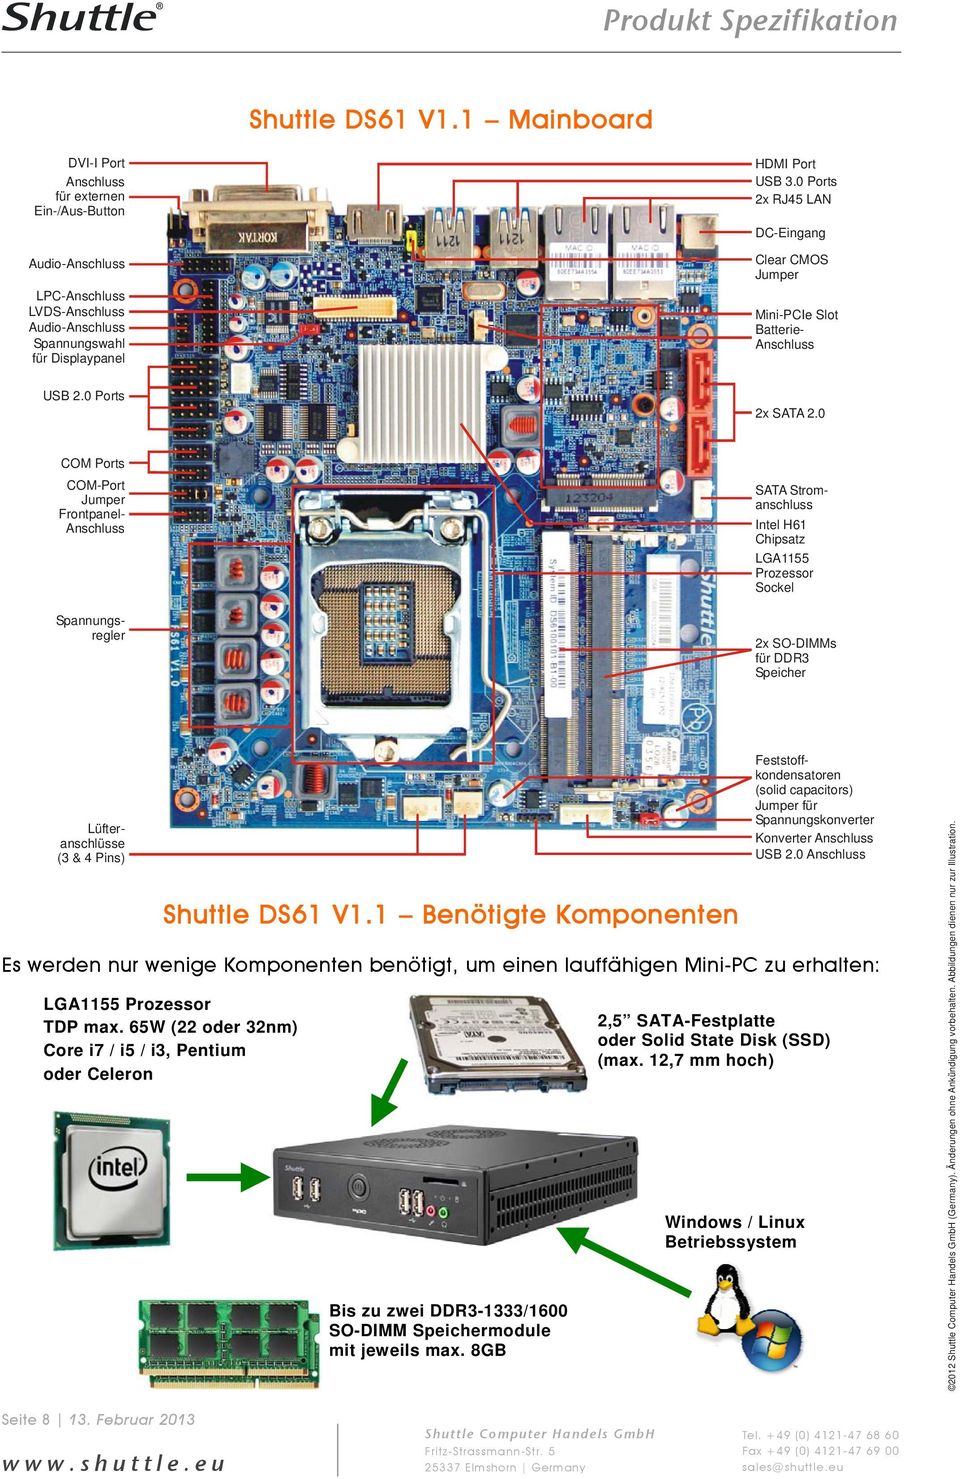 0 COM Ports COM-Port Jumper Frontpanel- Anschluss Intel H61 Chipsatz LGA1155 Prozessor Sockel 2x SO-DIMMs für DDR3 Speicher Lüfteranschlüsse (3 & 4 Pins) Shuttle DS61 V1.